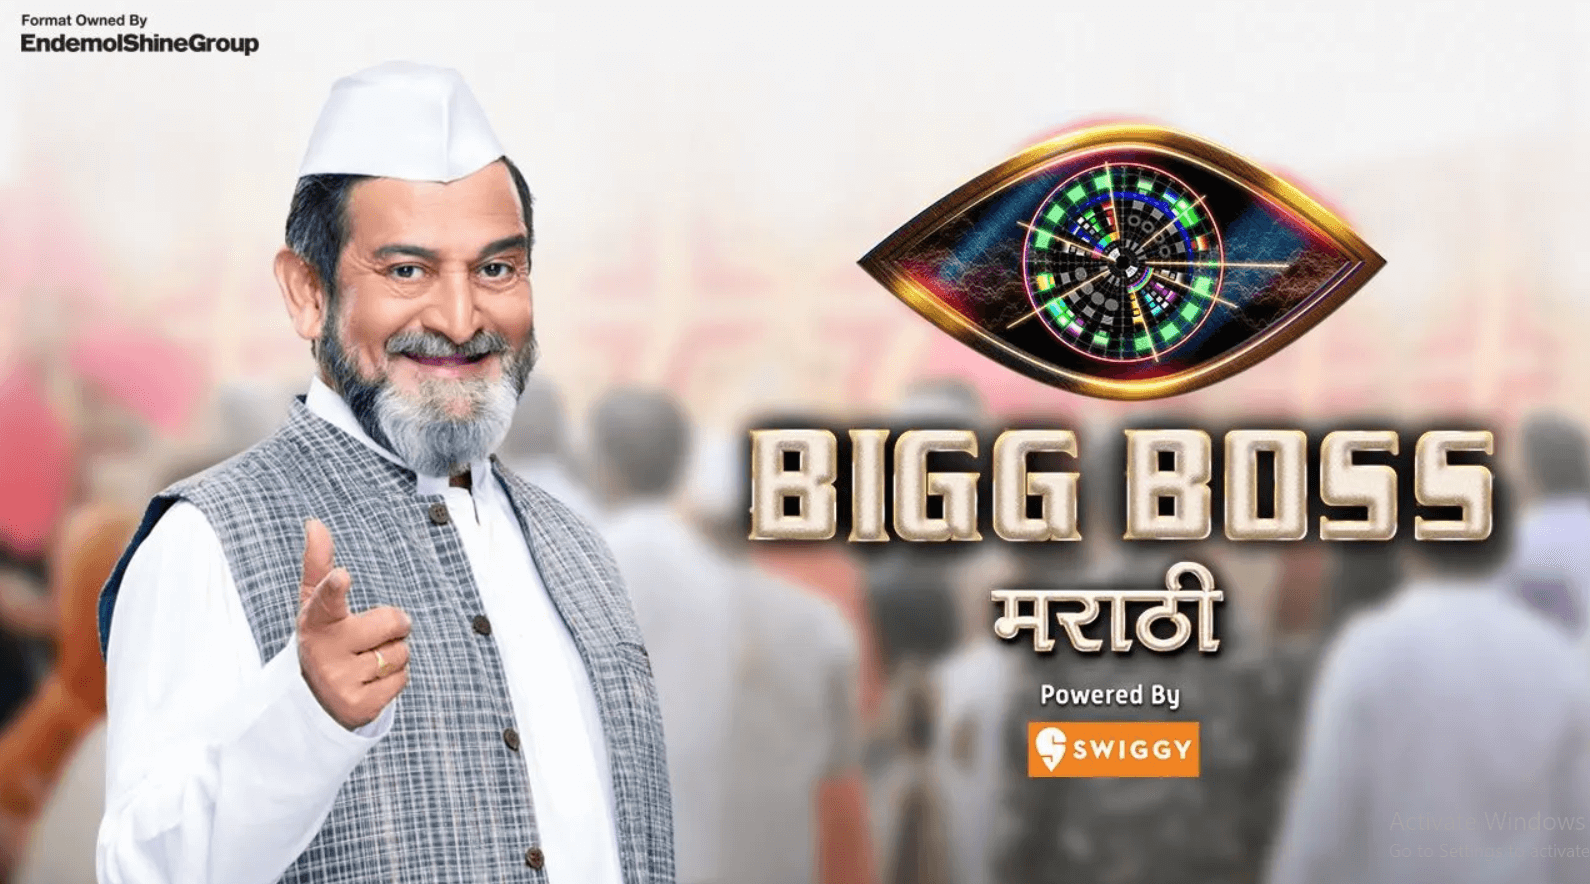 watch bigg boss marathi 2 online free